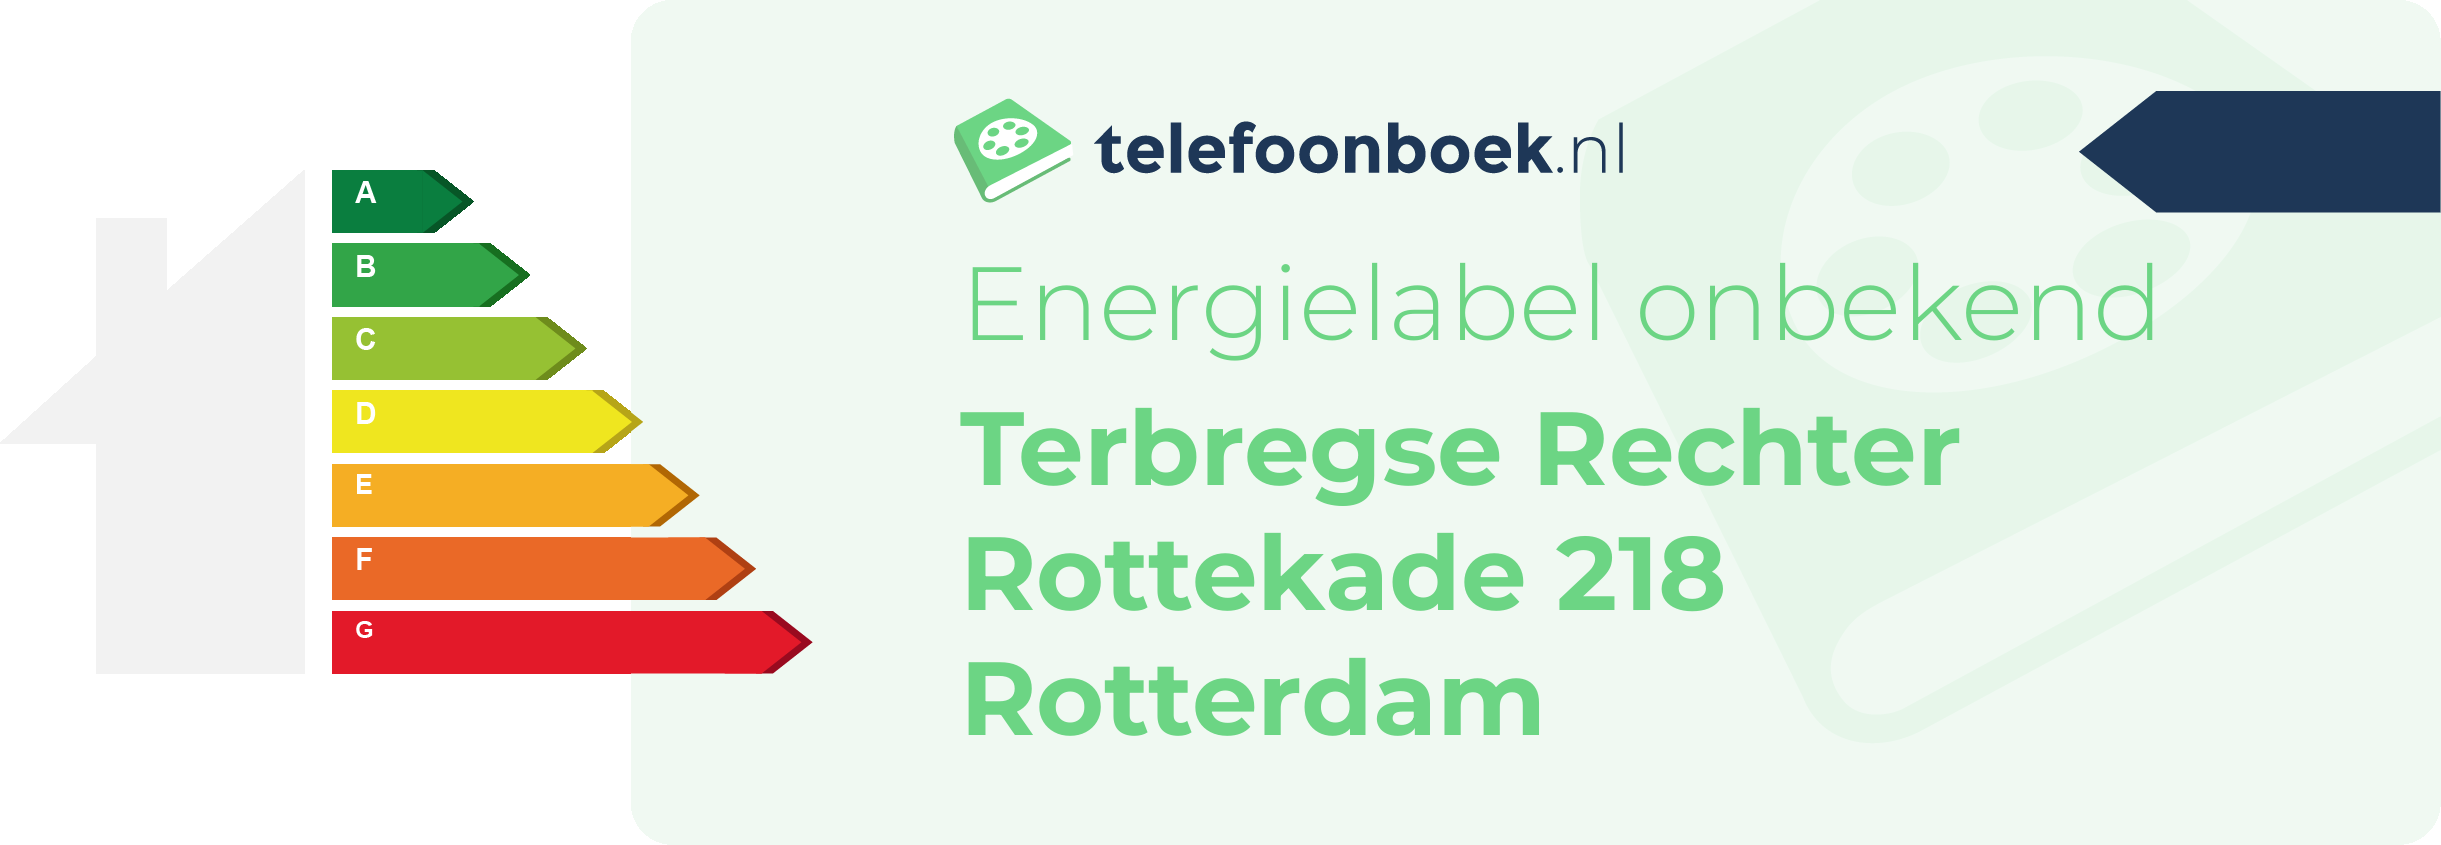 Energielabel Terbregse Rechter Rottekade 218 Rotterdam